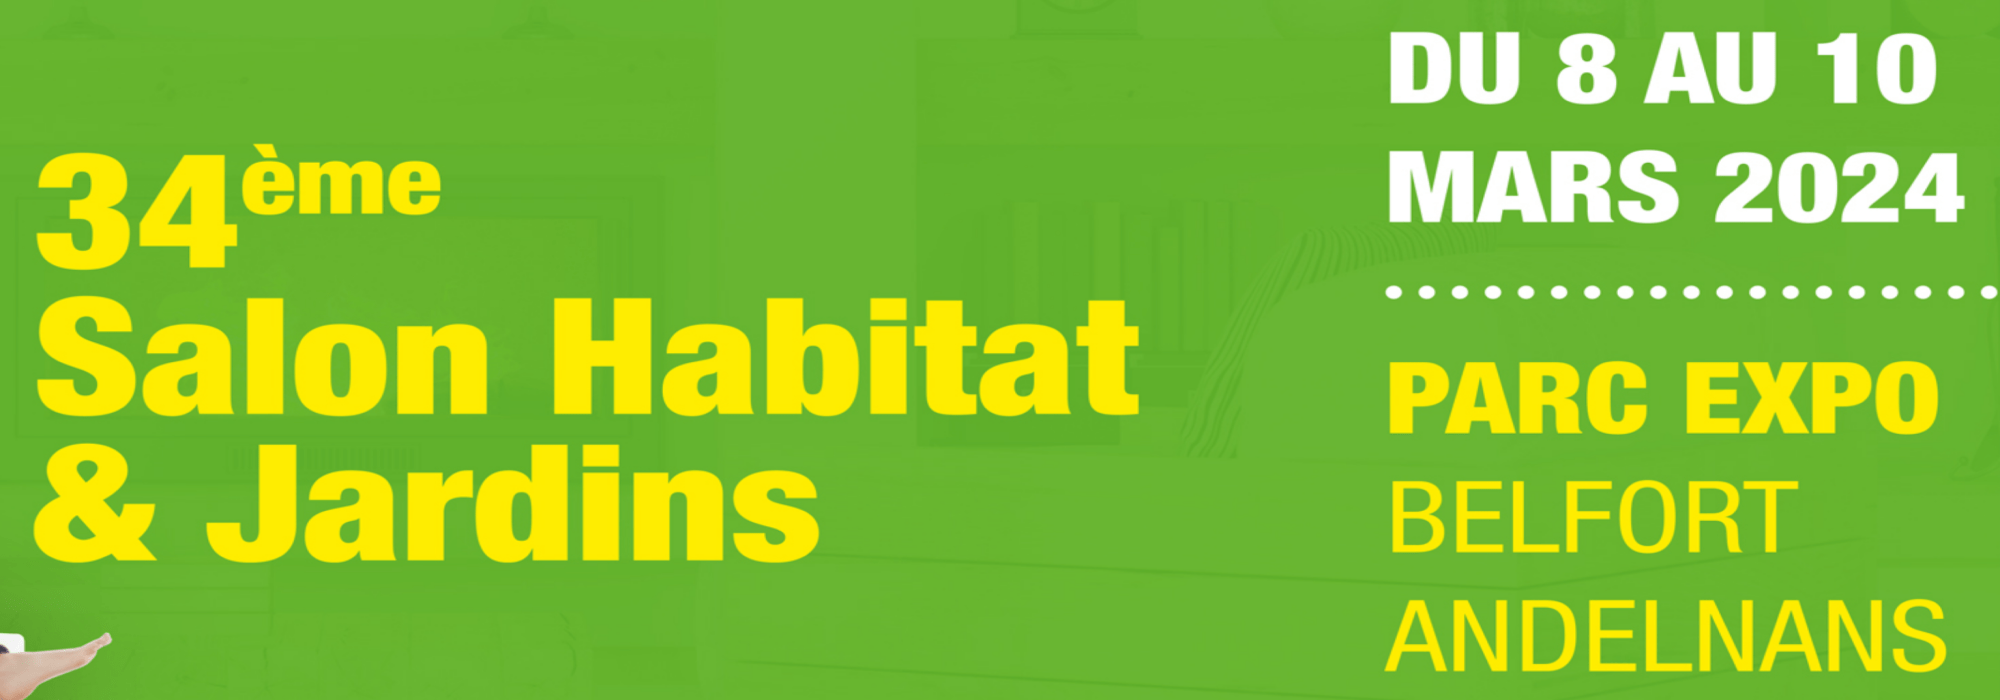 Salon Habitat et Jardins Andelnans mars 2024